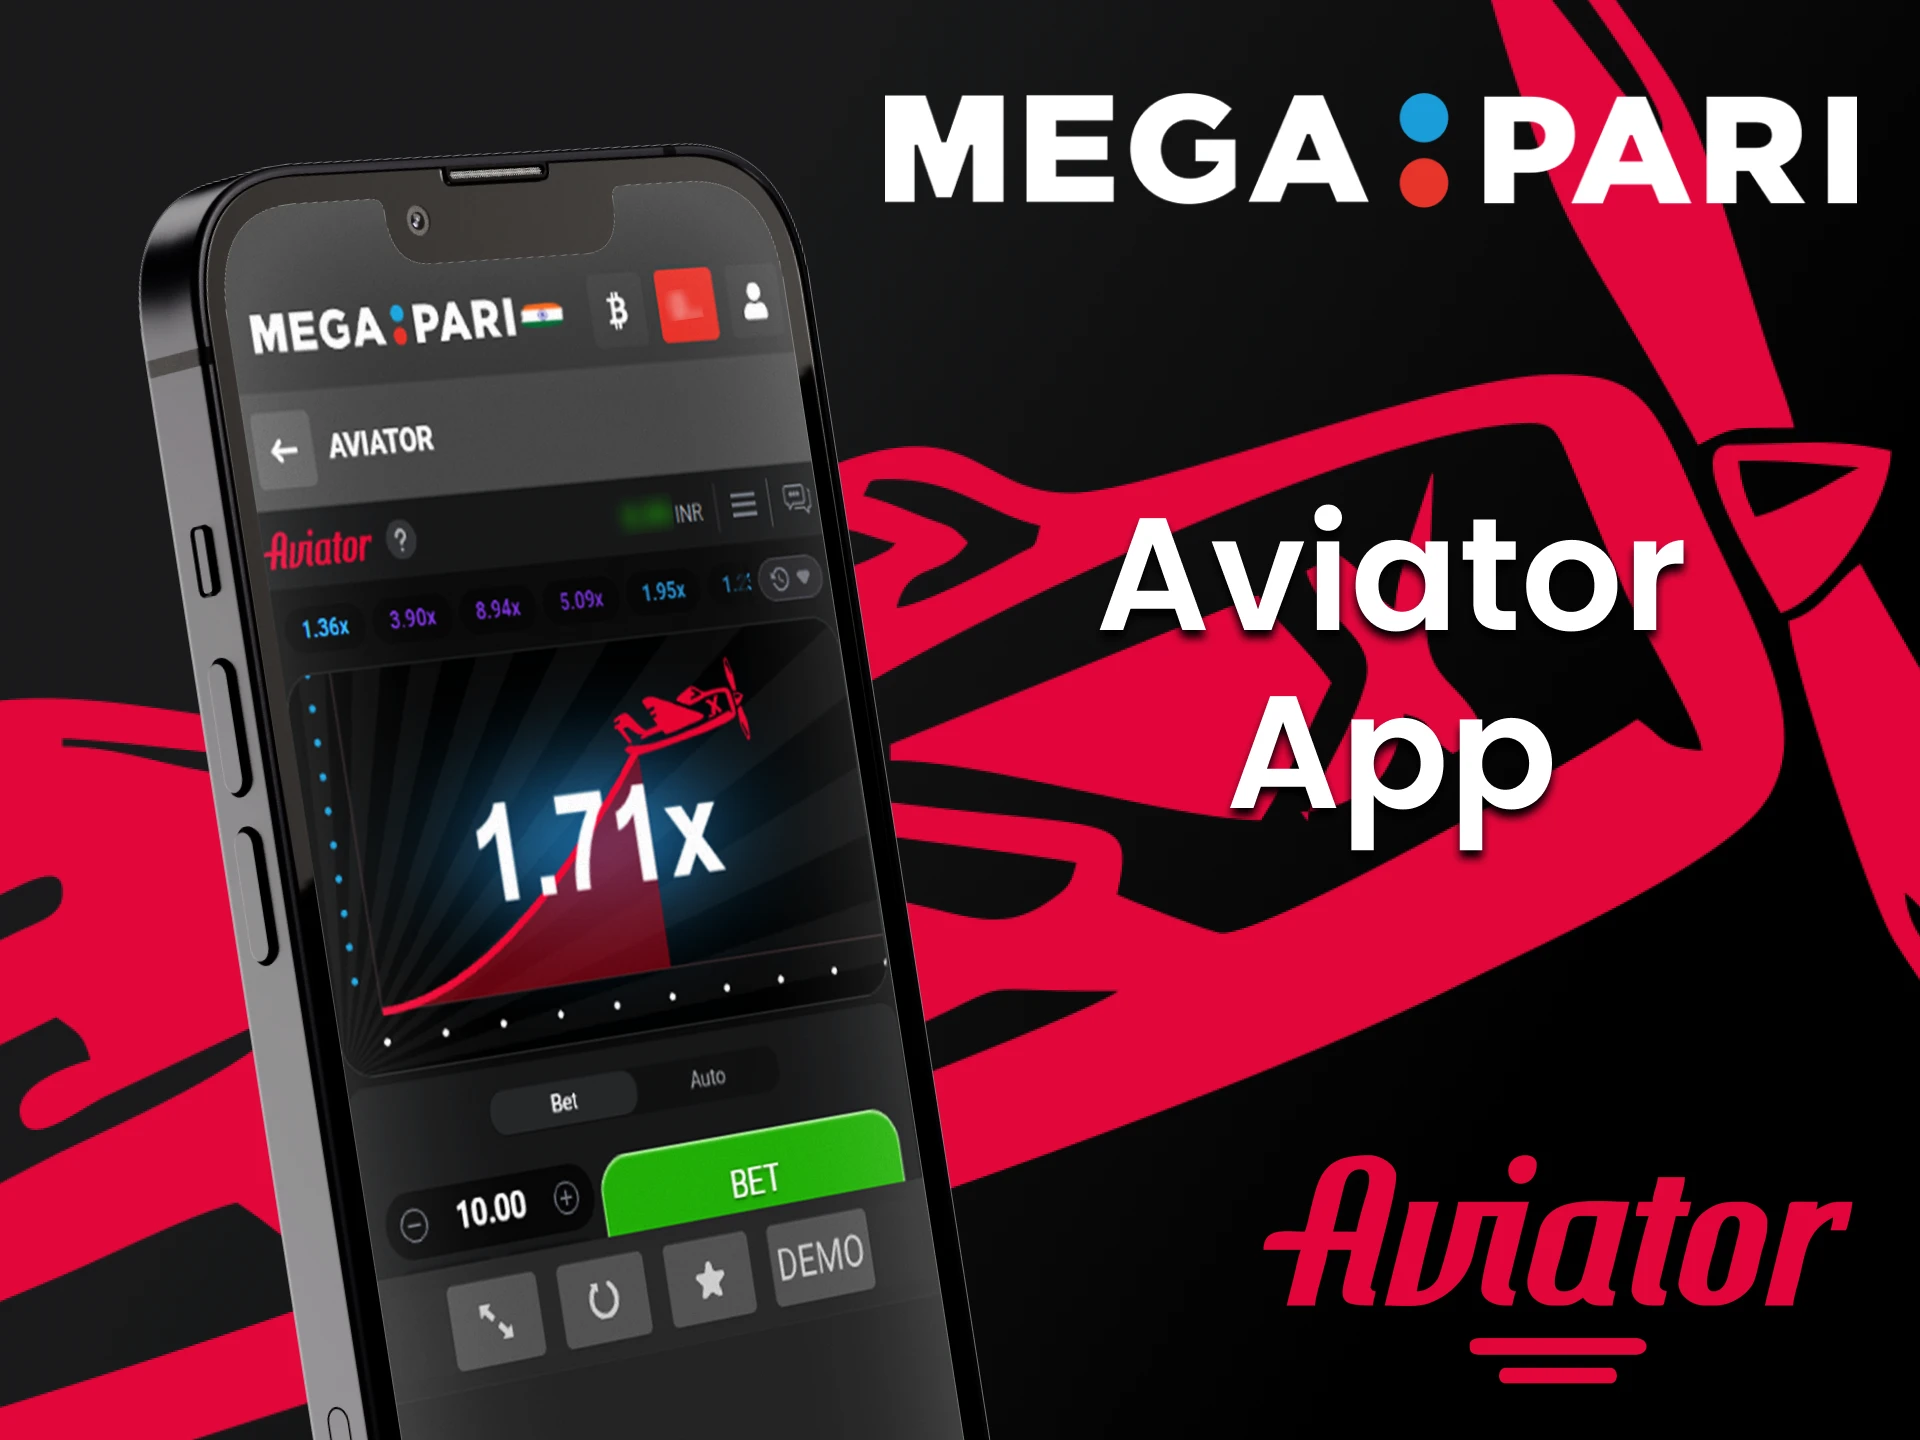 Play the Aviator game using the popular Megapari mobile app.